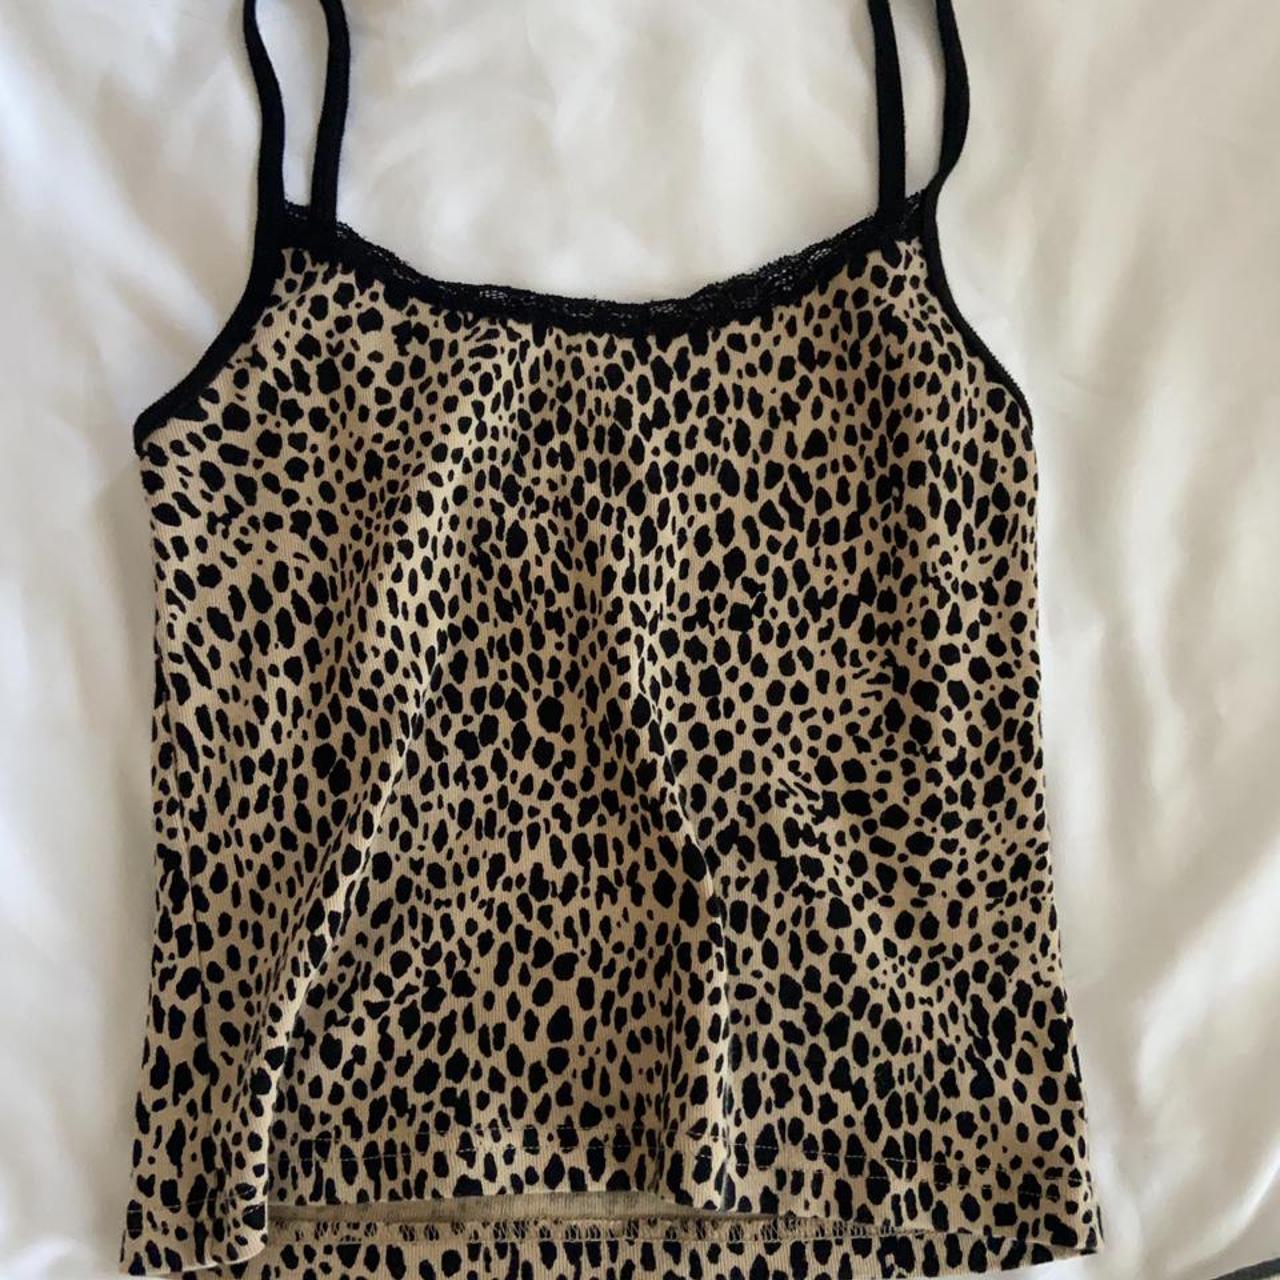 Brandy Melville leopard lace tank Black Size XS - $20 - From Kimberly